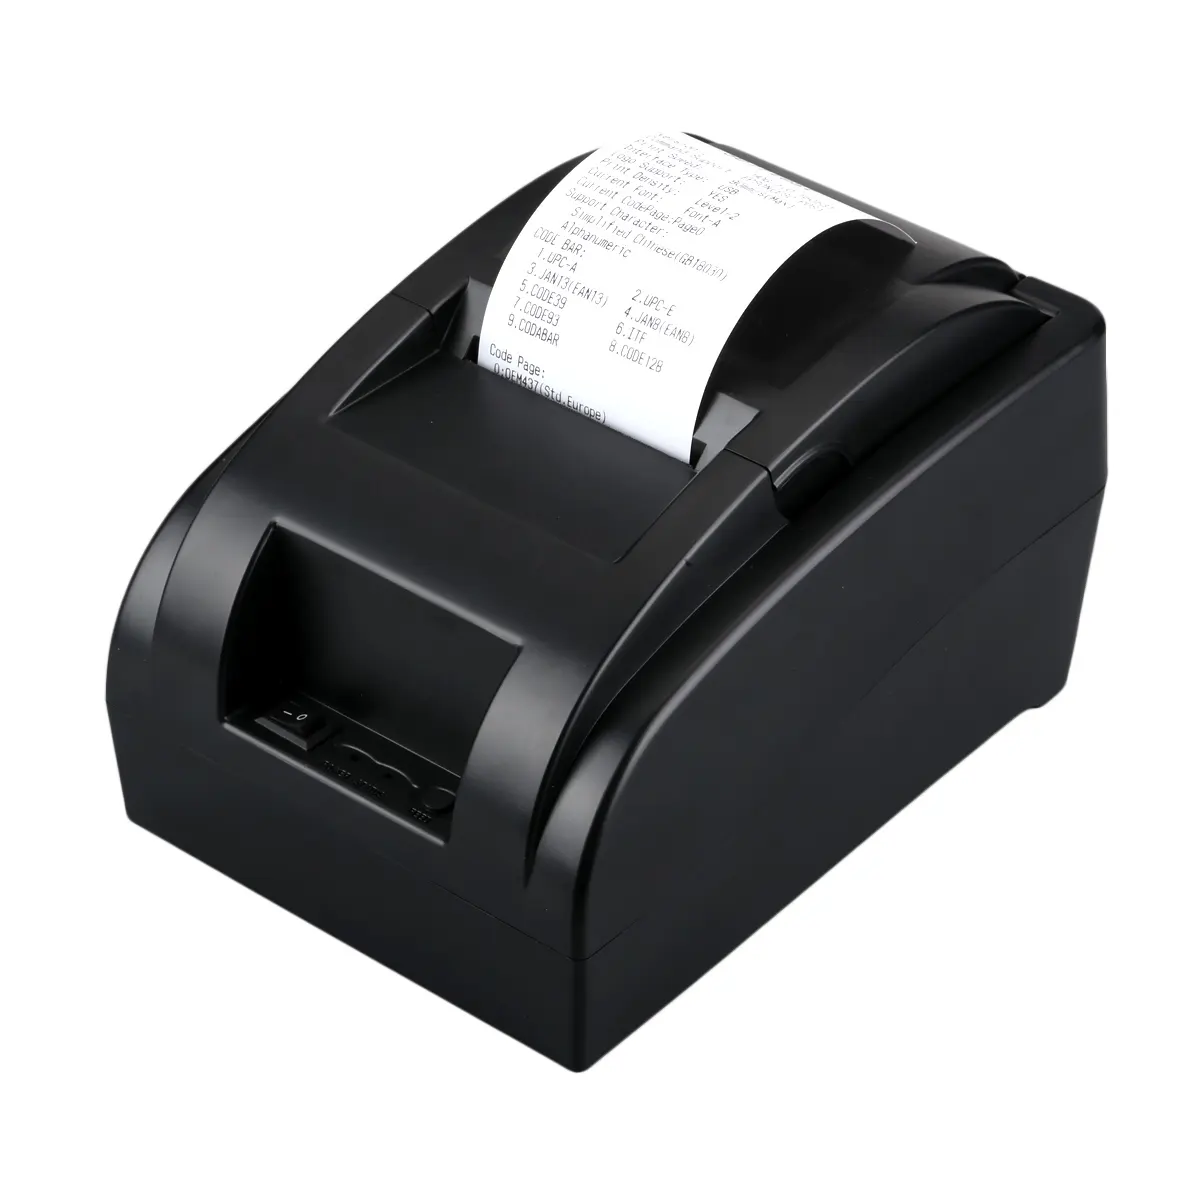 HSPOS 58mm Thermal Printer USB POS Printer Receipt Bill Printer 90mm/s Printing Speed